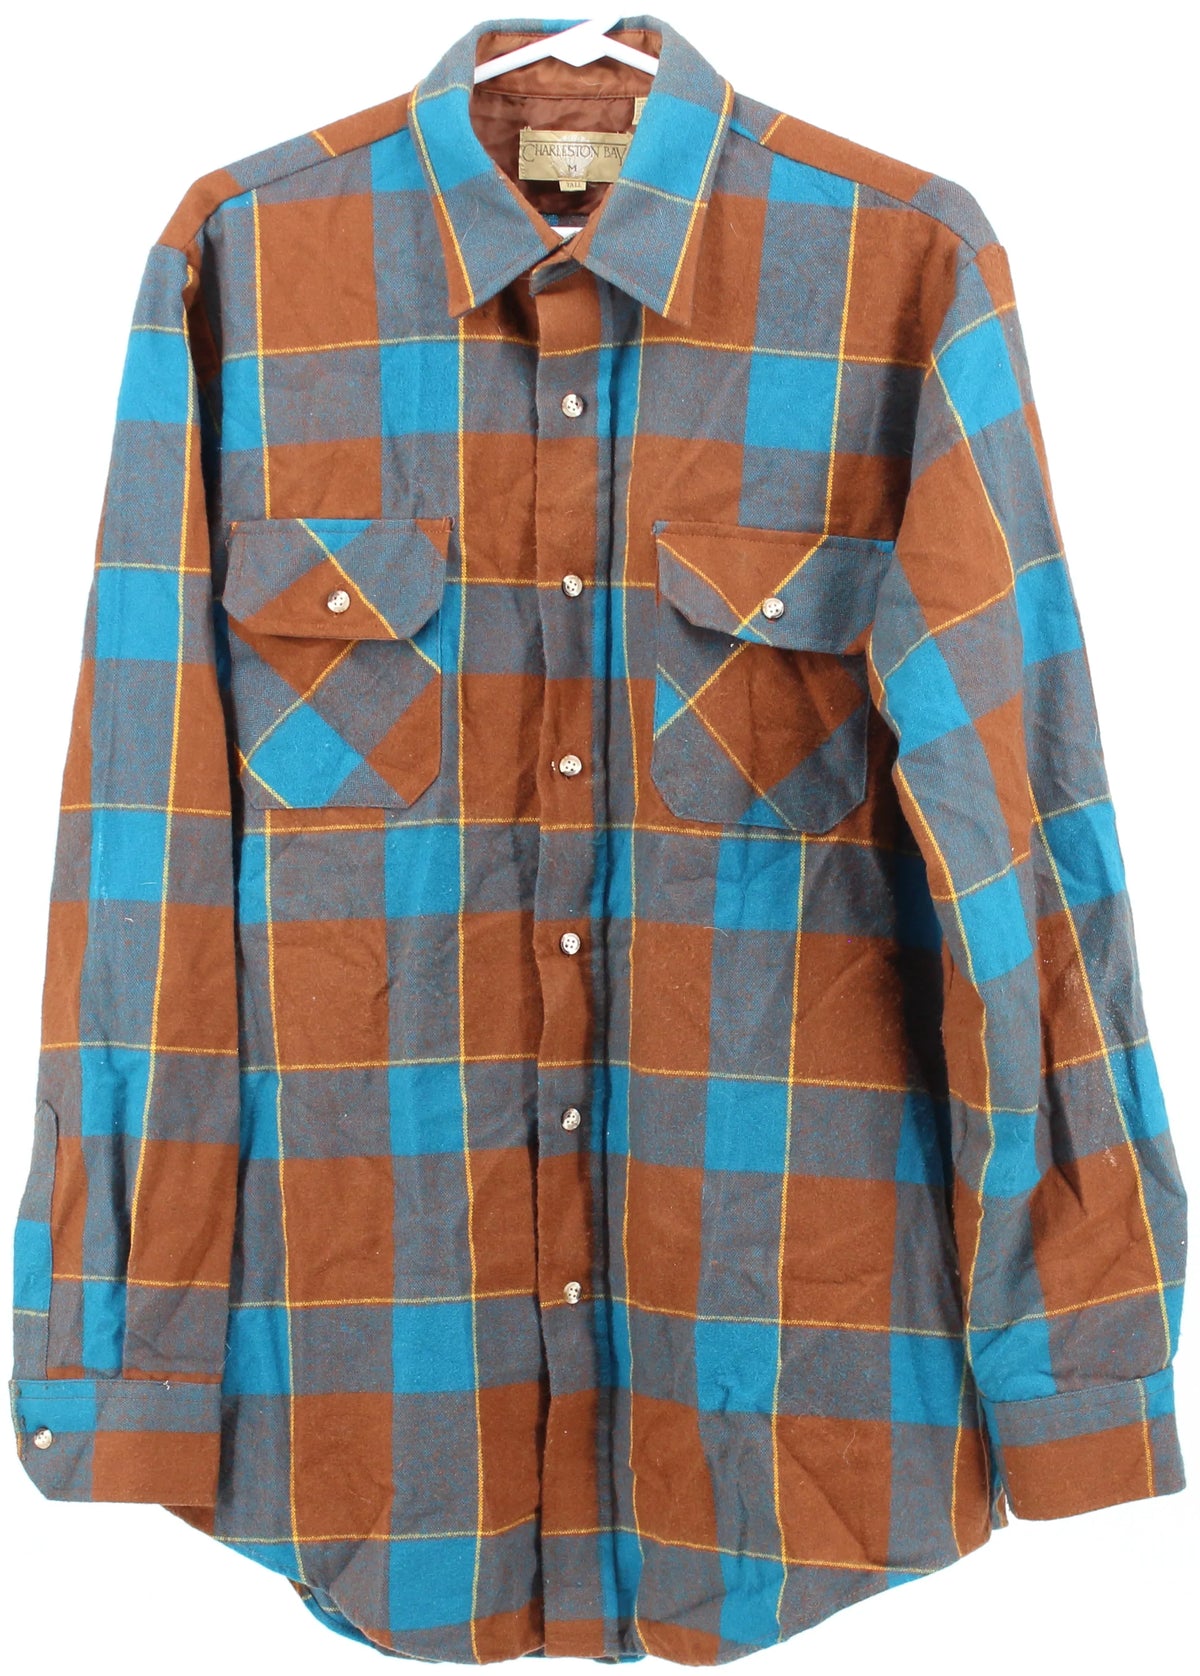 Charleston Bay Brown and Blue Plaid Flannel Shirt